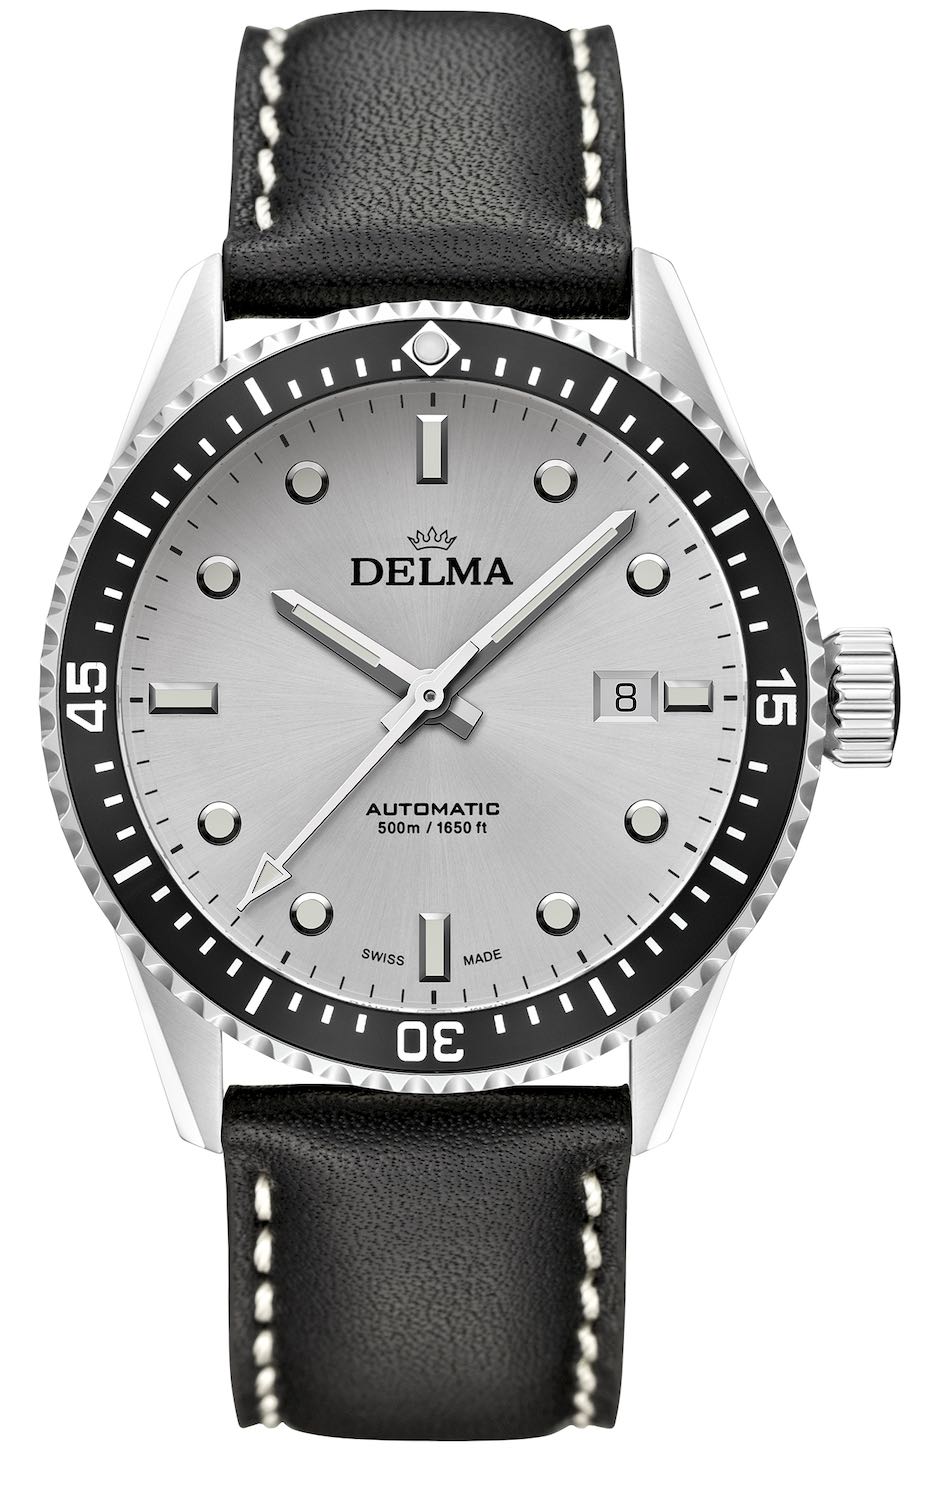 Delma Cayman Automatic - Value Proposition Diver - 5